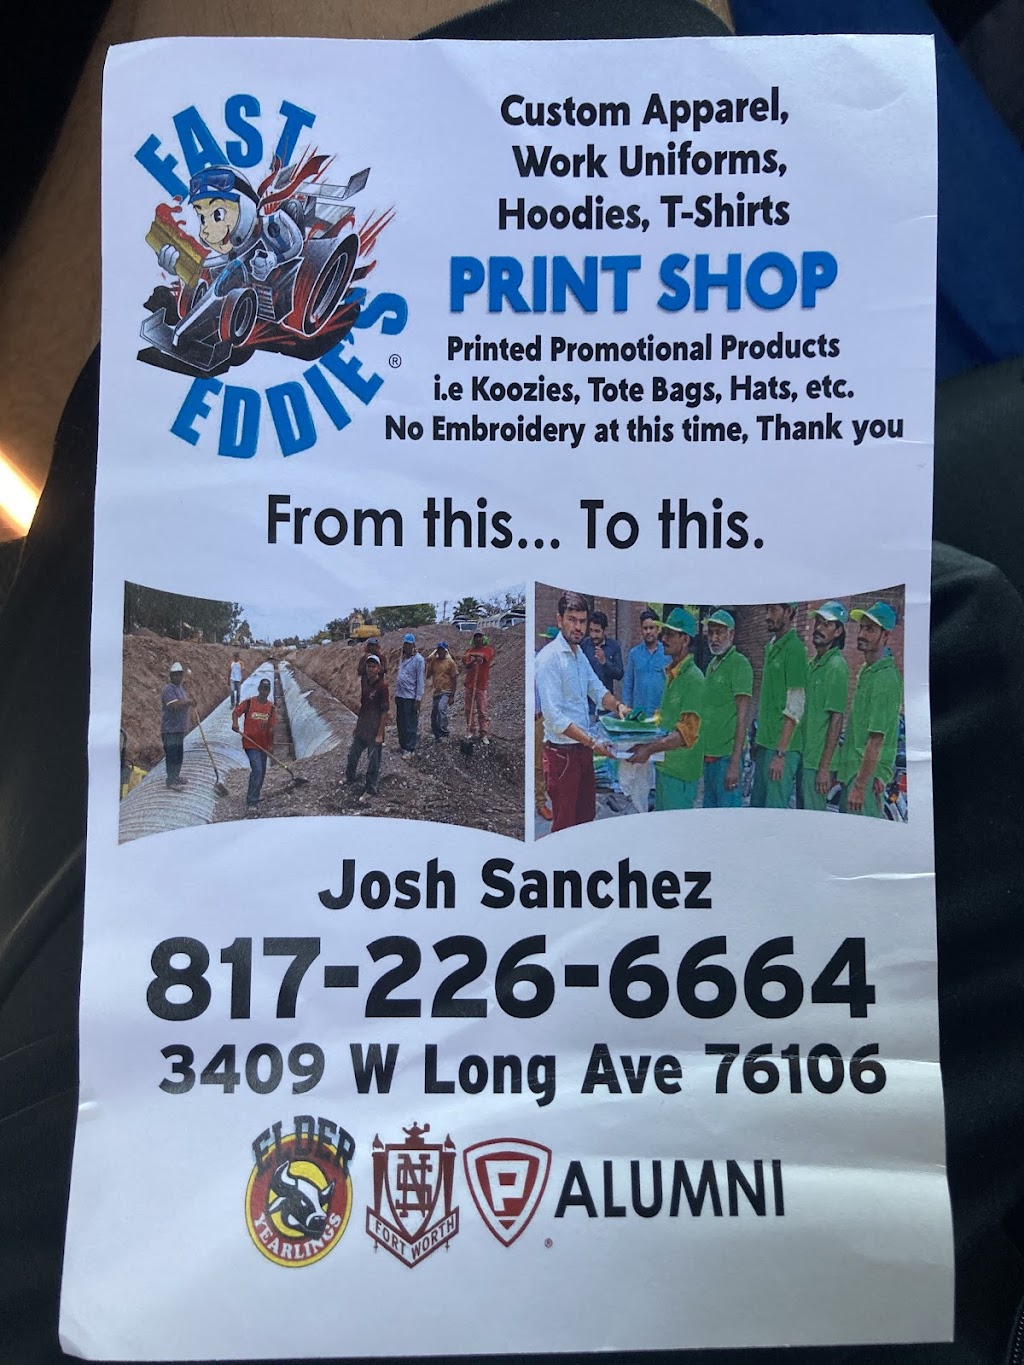 Fast Eddies Print Shop | 3409 W Long Ave, Fort Worth, TX 76106 | Phone: (817) 226-6664